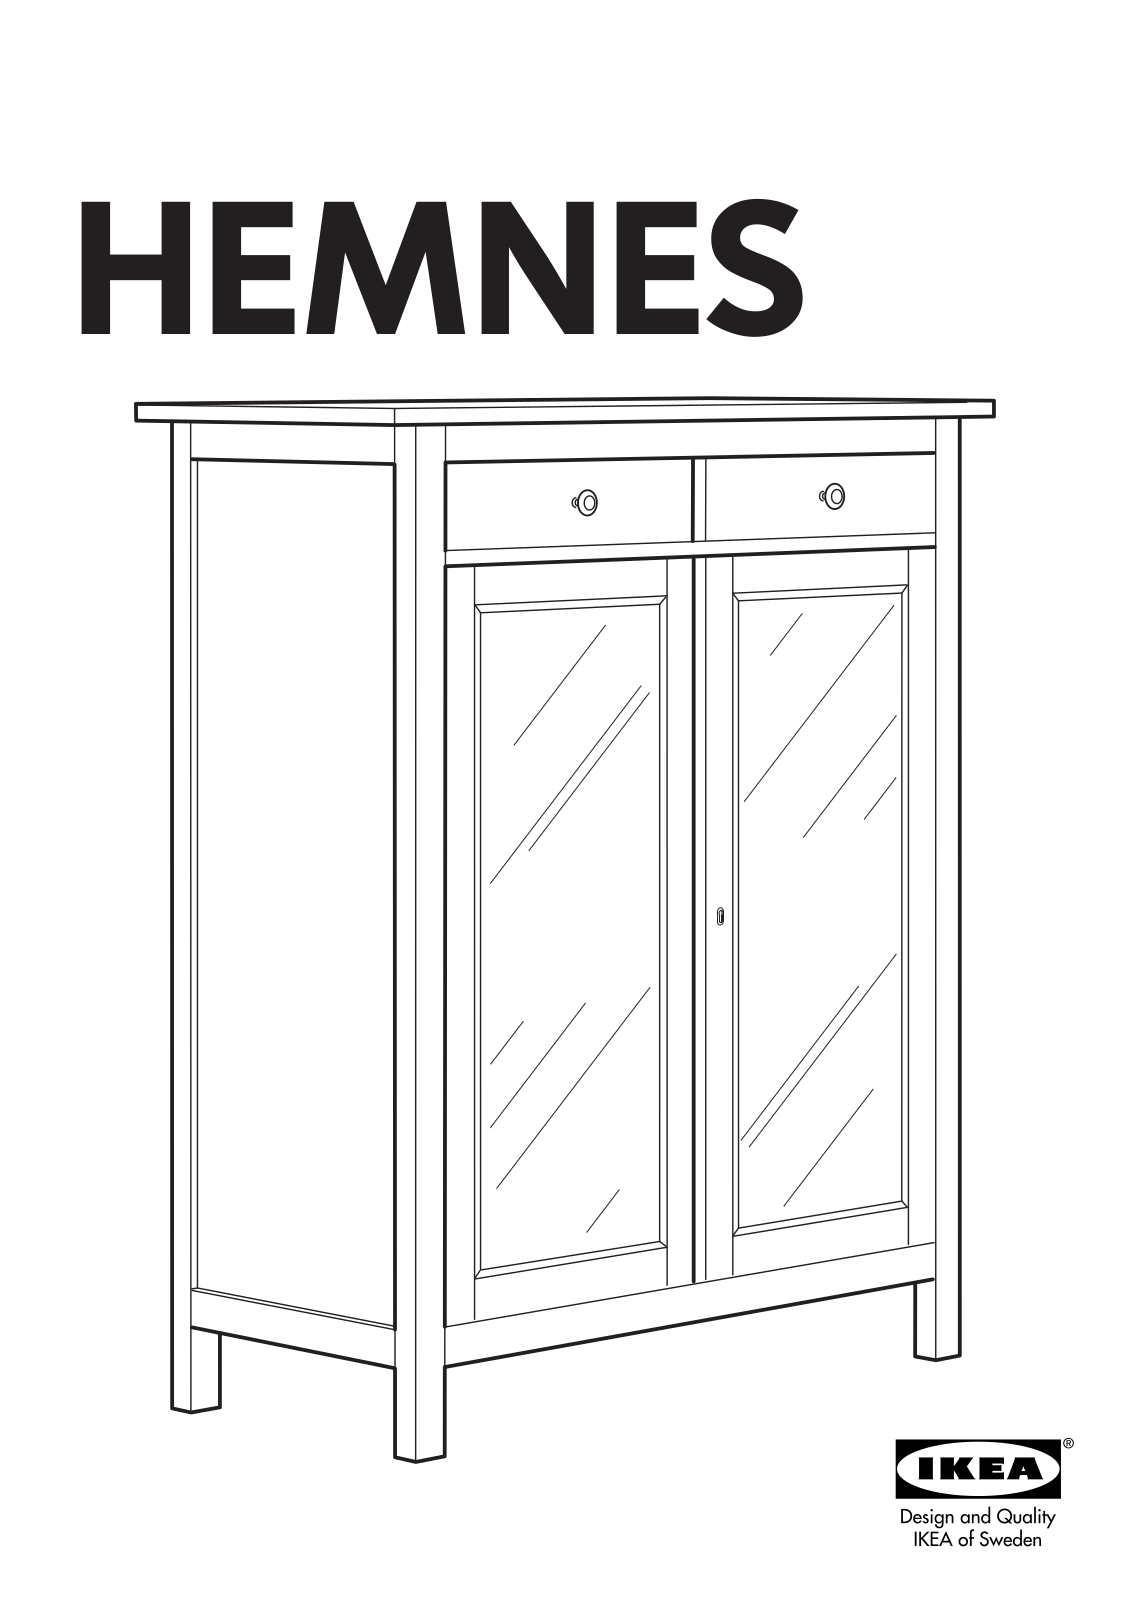 IKEA HEMNES LINEN CABINET Assembly Instruction